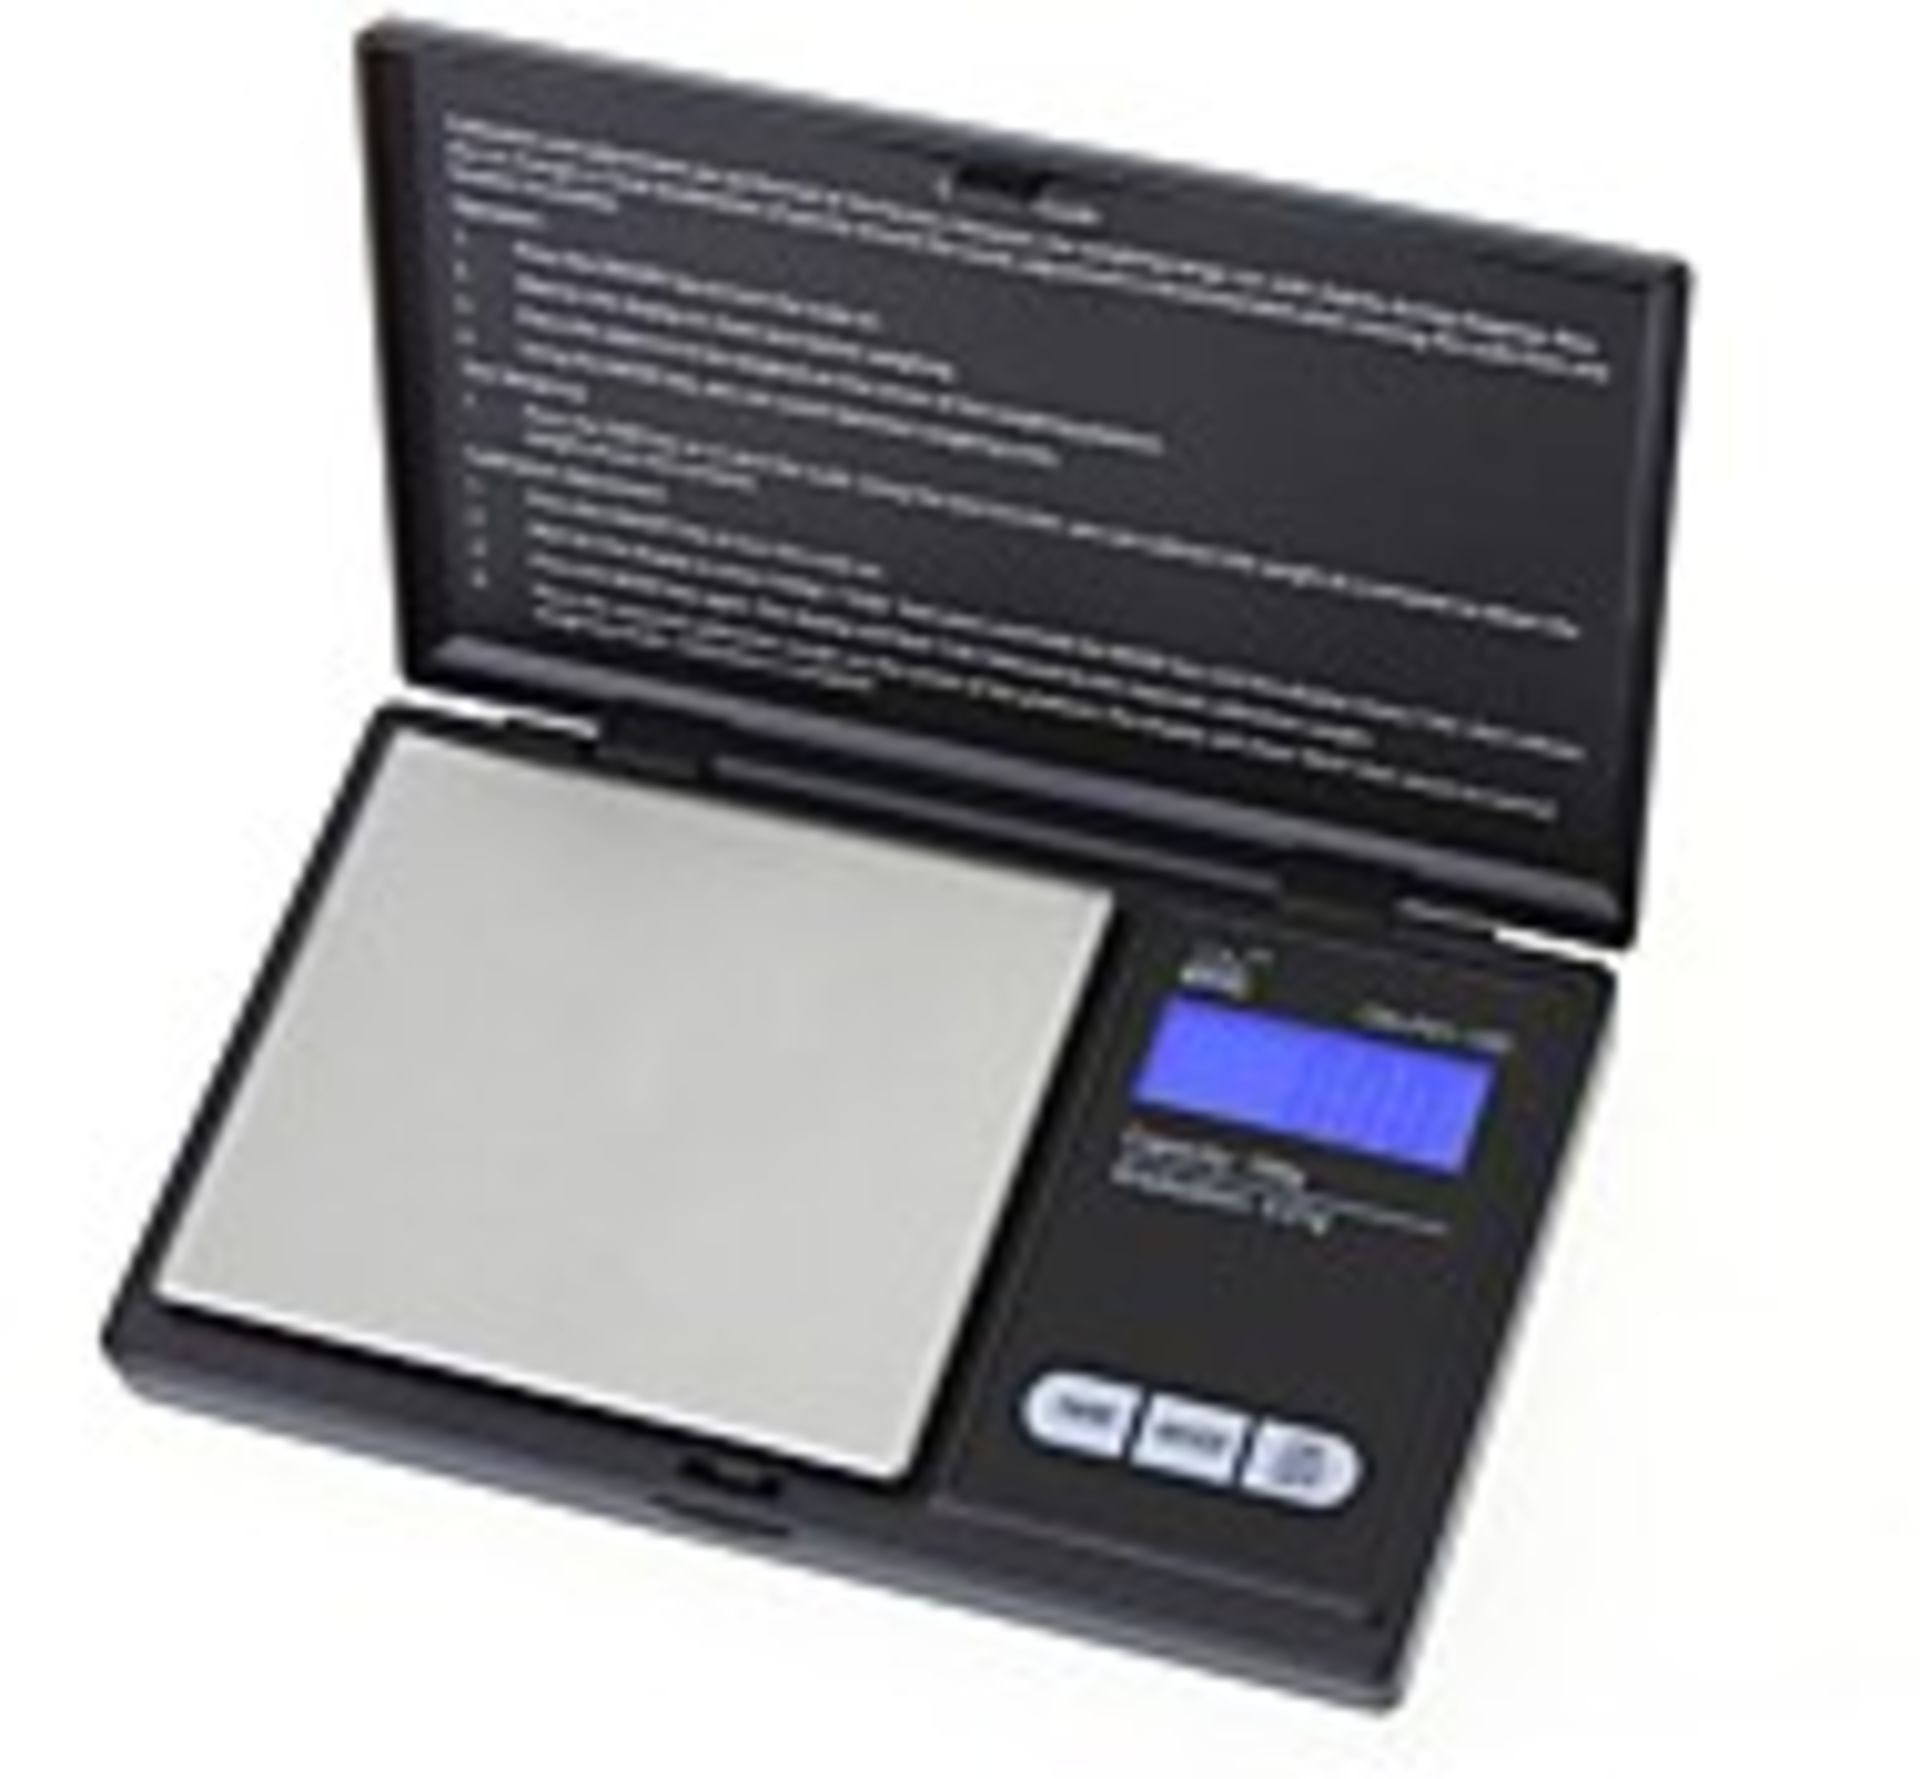 V *TRADE QTY* Brand New Professional Digital Mini Scales (500 gram x 0.1 gram) X 5 YOUR BID PRICE TO